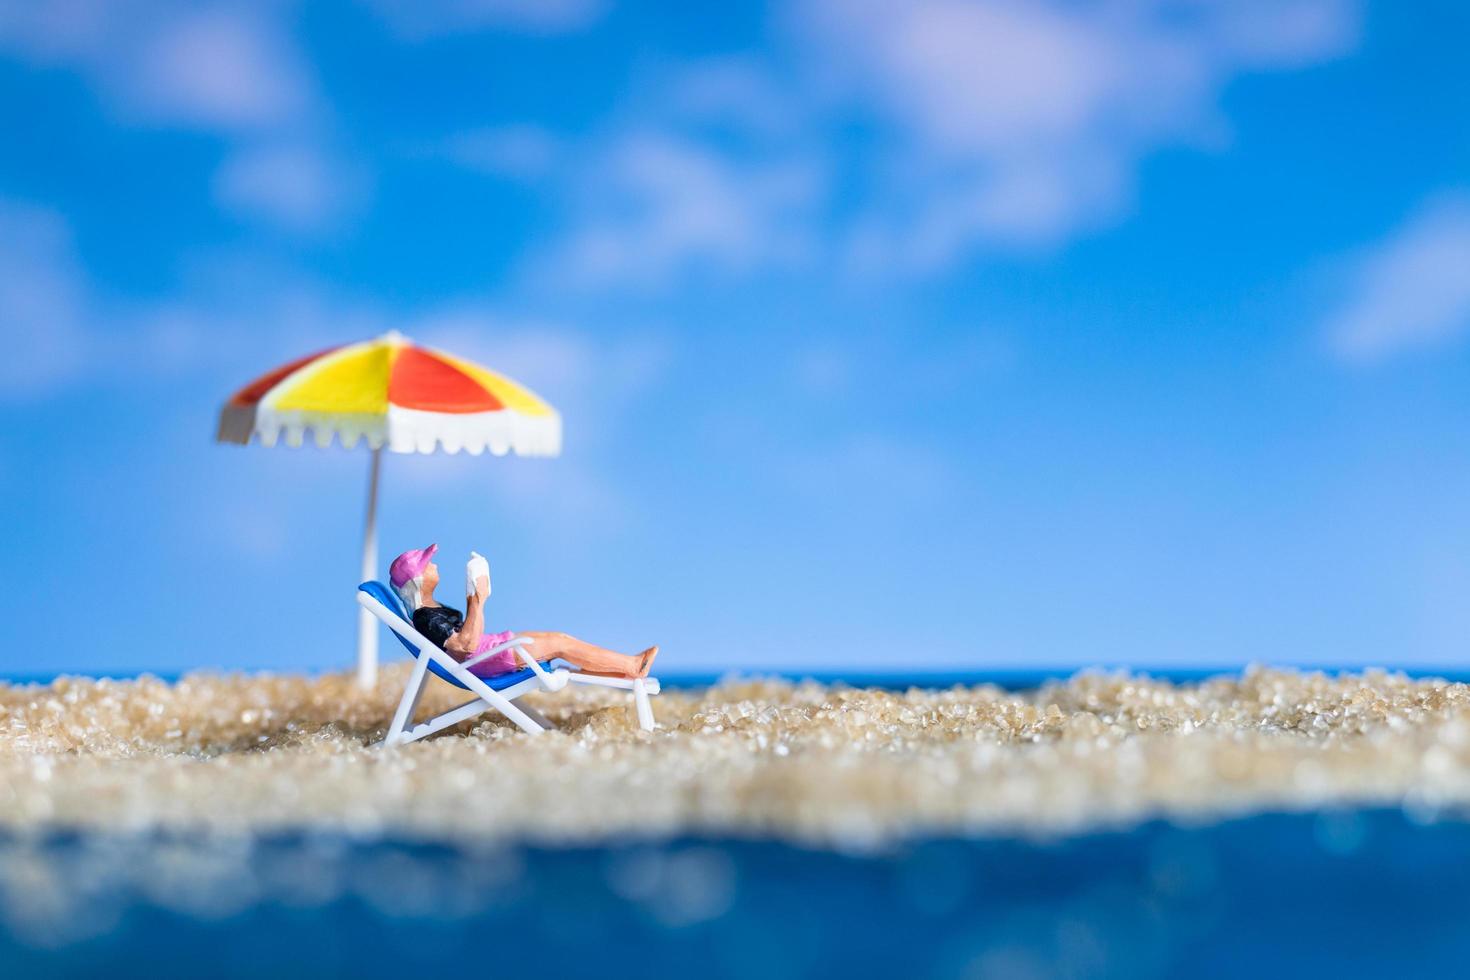 estatueta em miniatura tomando sol na praia foto